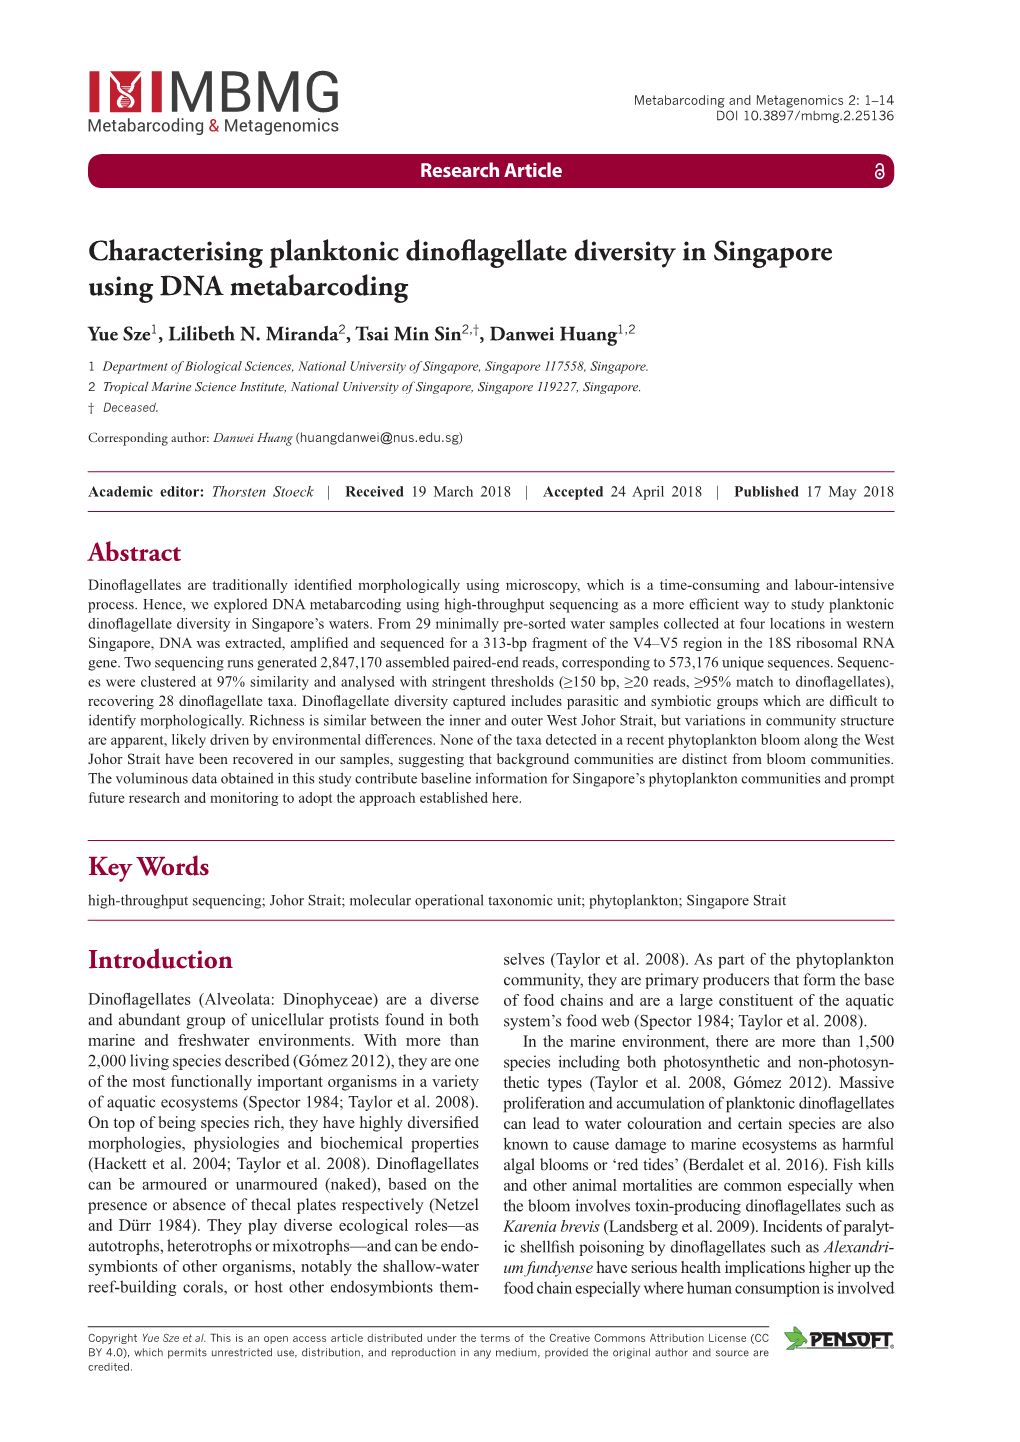 Characterising Planktonic Dinoflagellate Diversity in Singapore Using DNA Metabarcoding